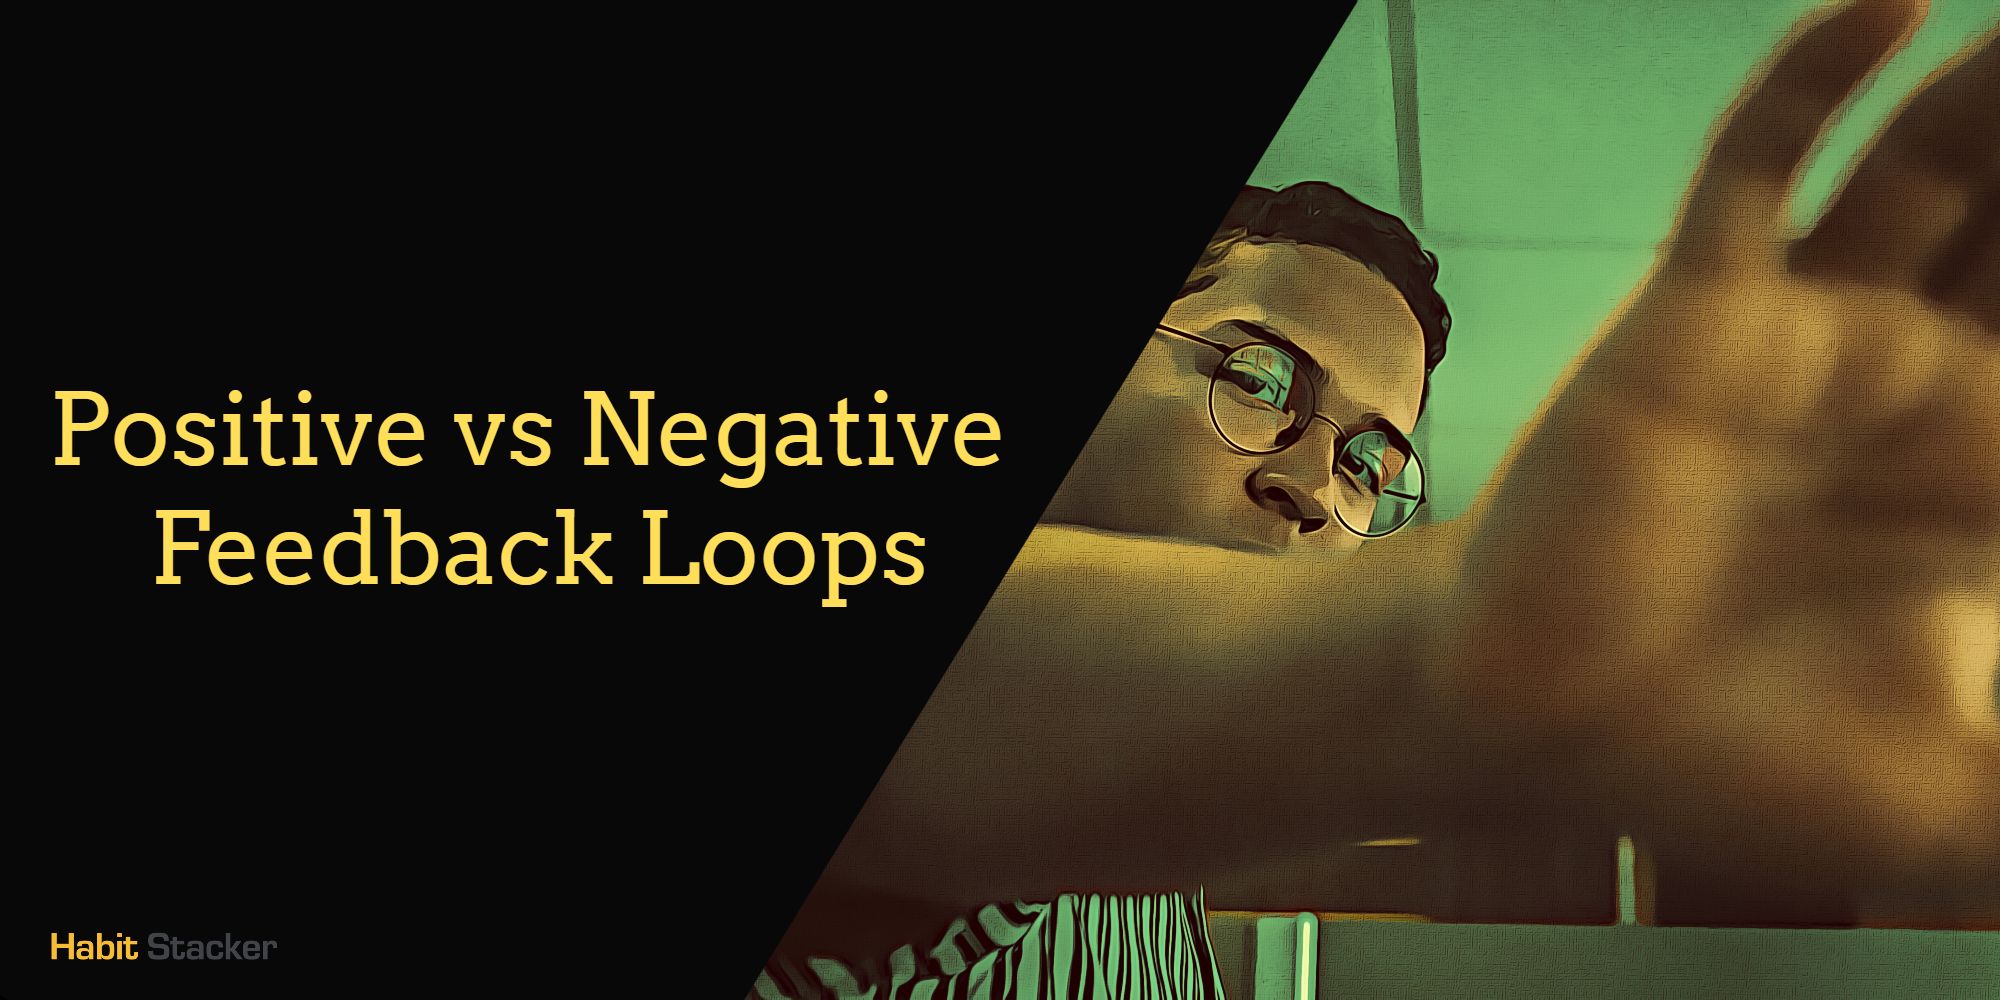 Negative Feedback Loops